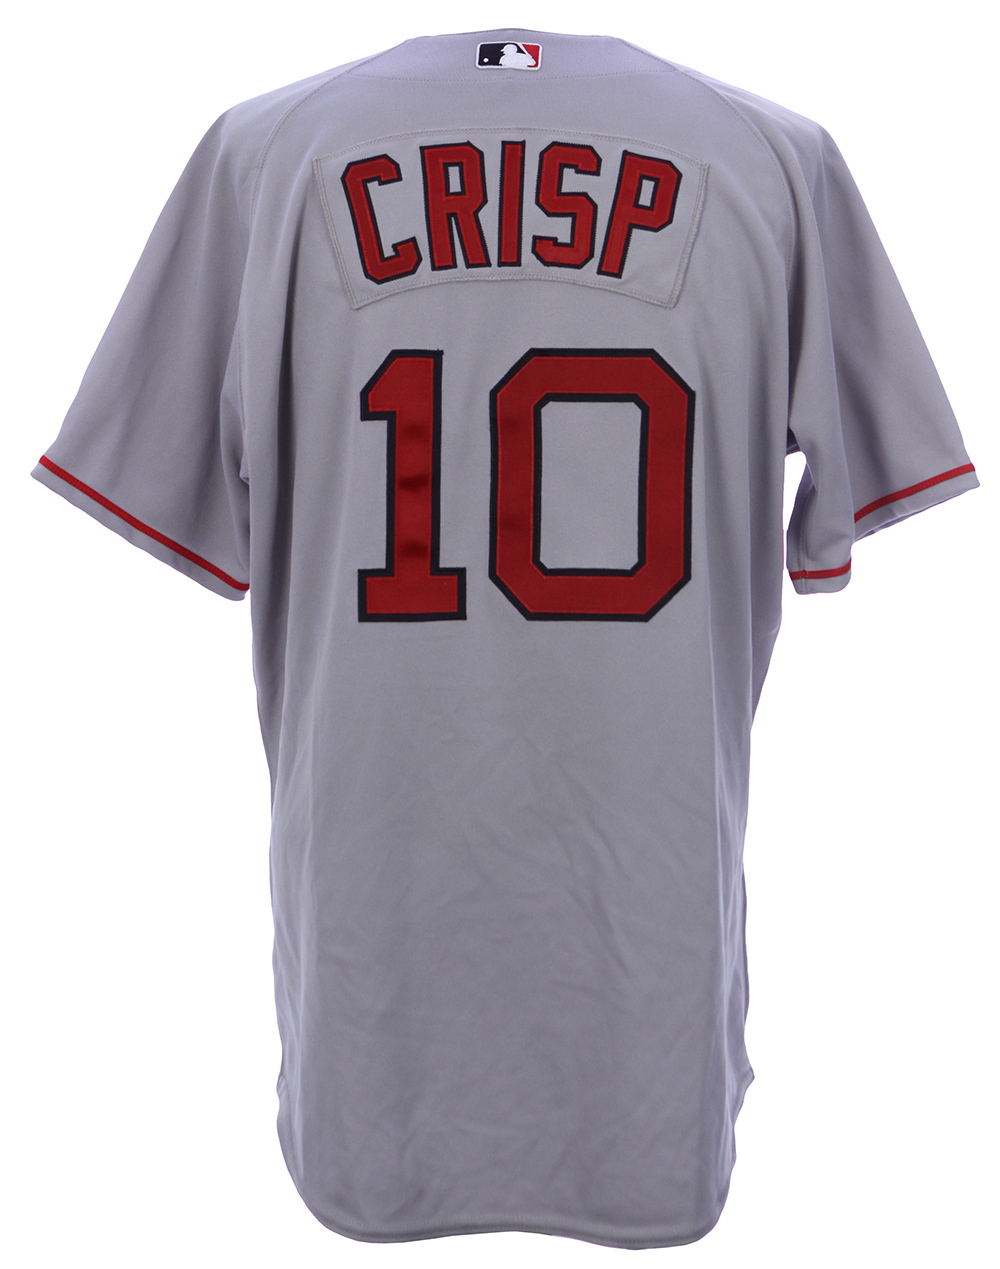 Coco Crisp Boston Red Sox Road Jersey 